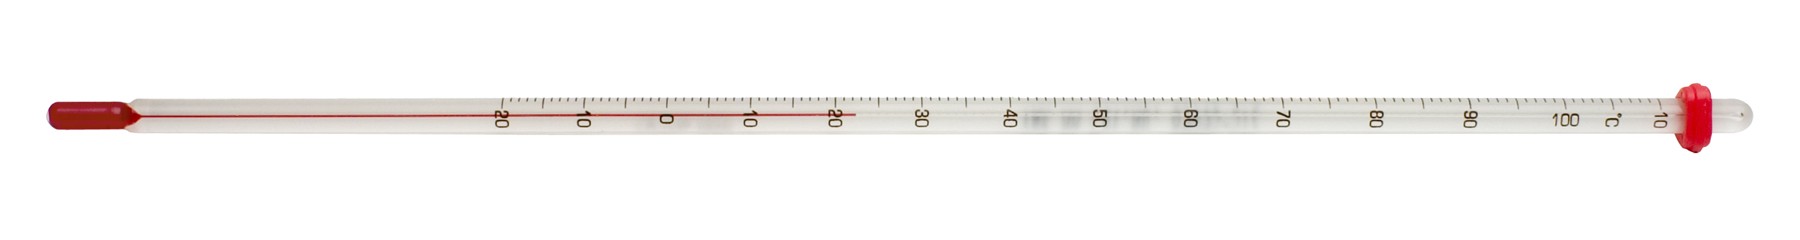 SP Bel-Art, H-B DURAC General Purpose Liquid-In-Glass Laboratory Thermometer; 0 to 300F, Total Immersion, Organic Liquid Fill